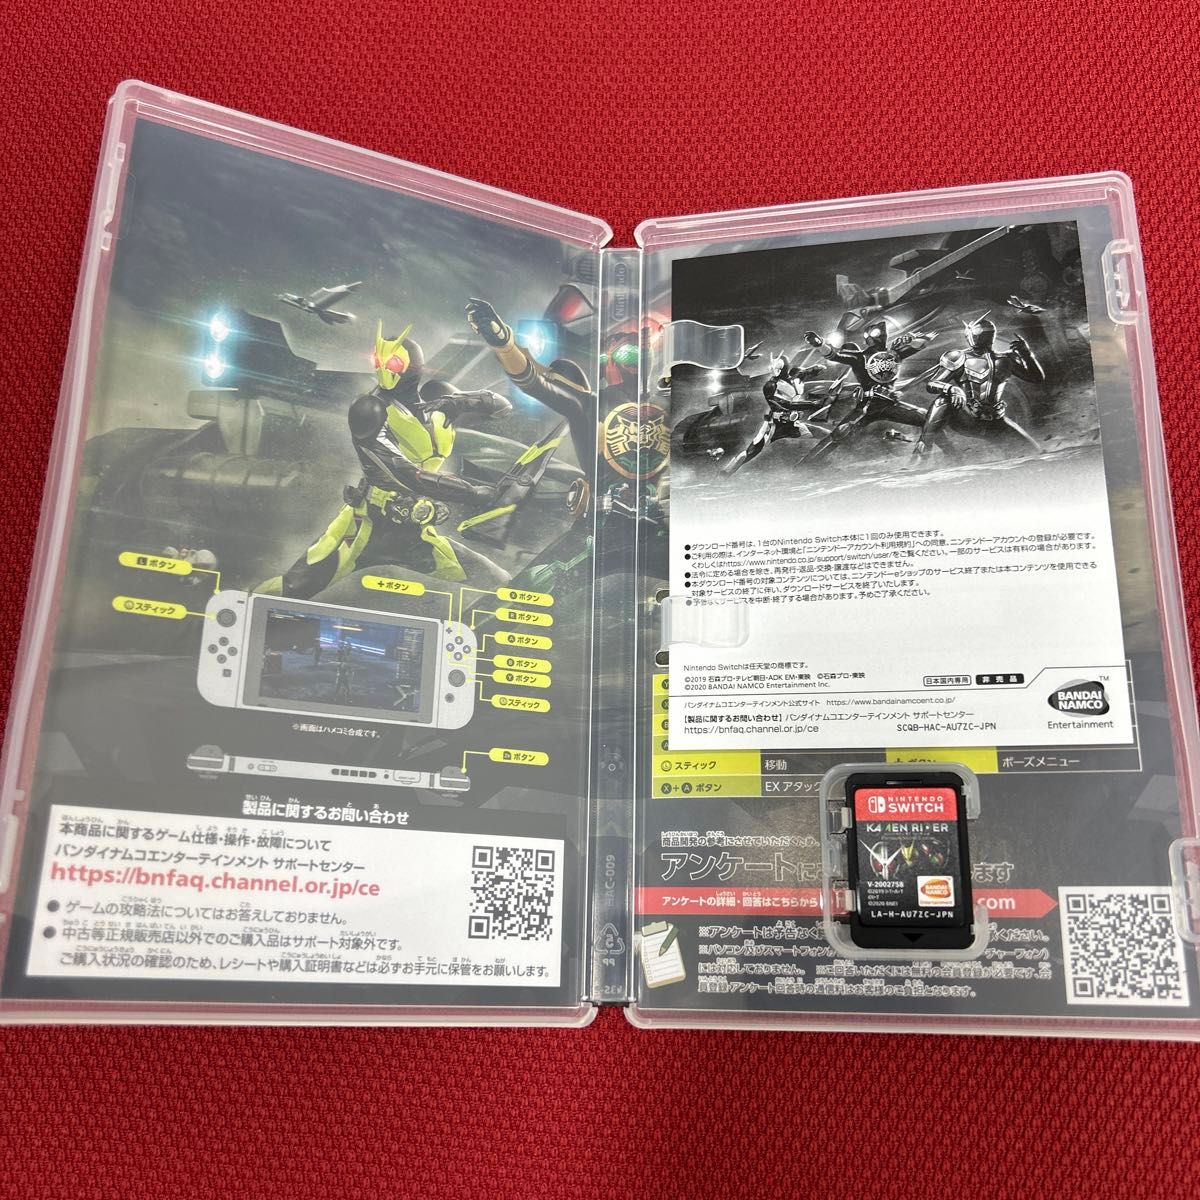 【Switch】 KAMENRIDER memory of heroez [Premium Sound Edition] 限定版